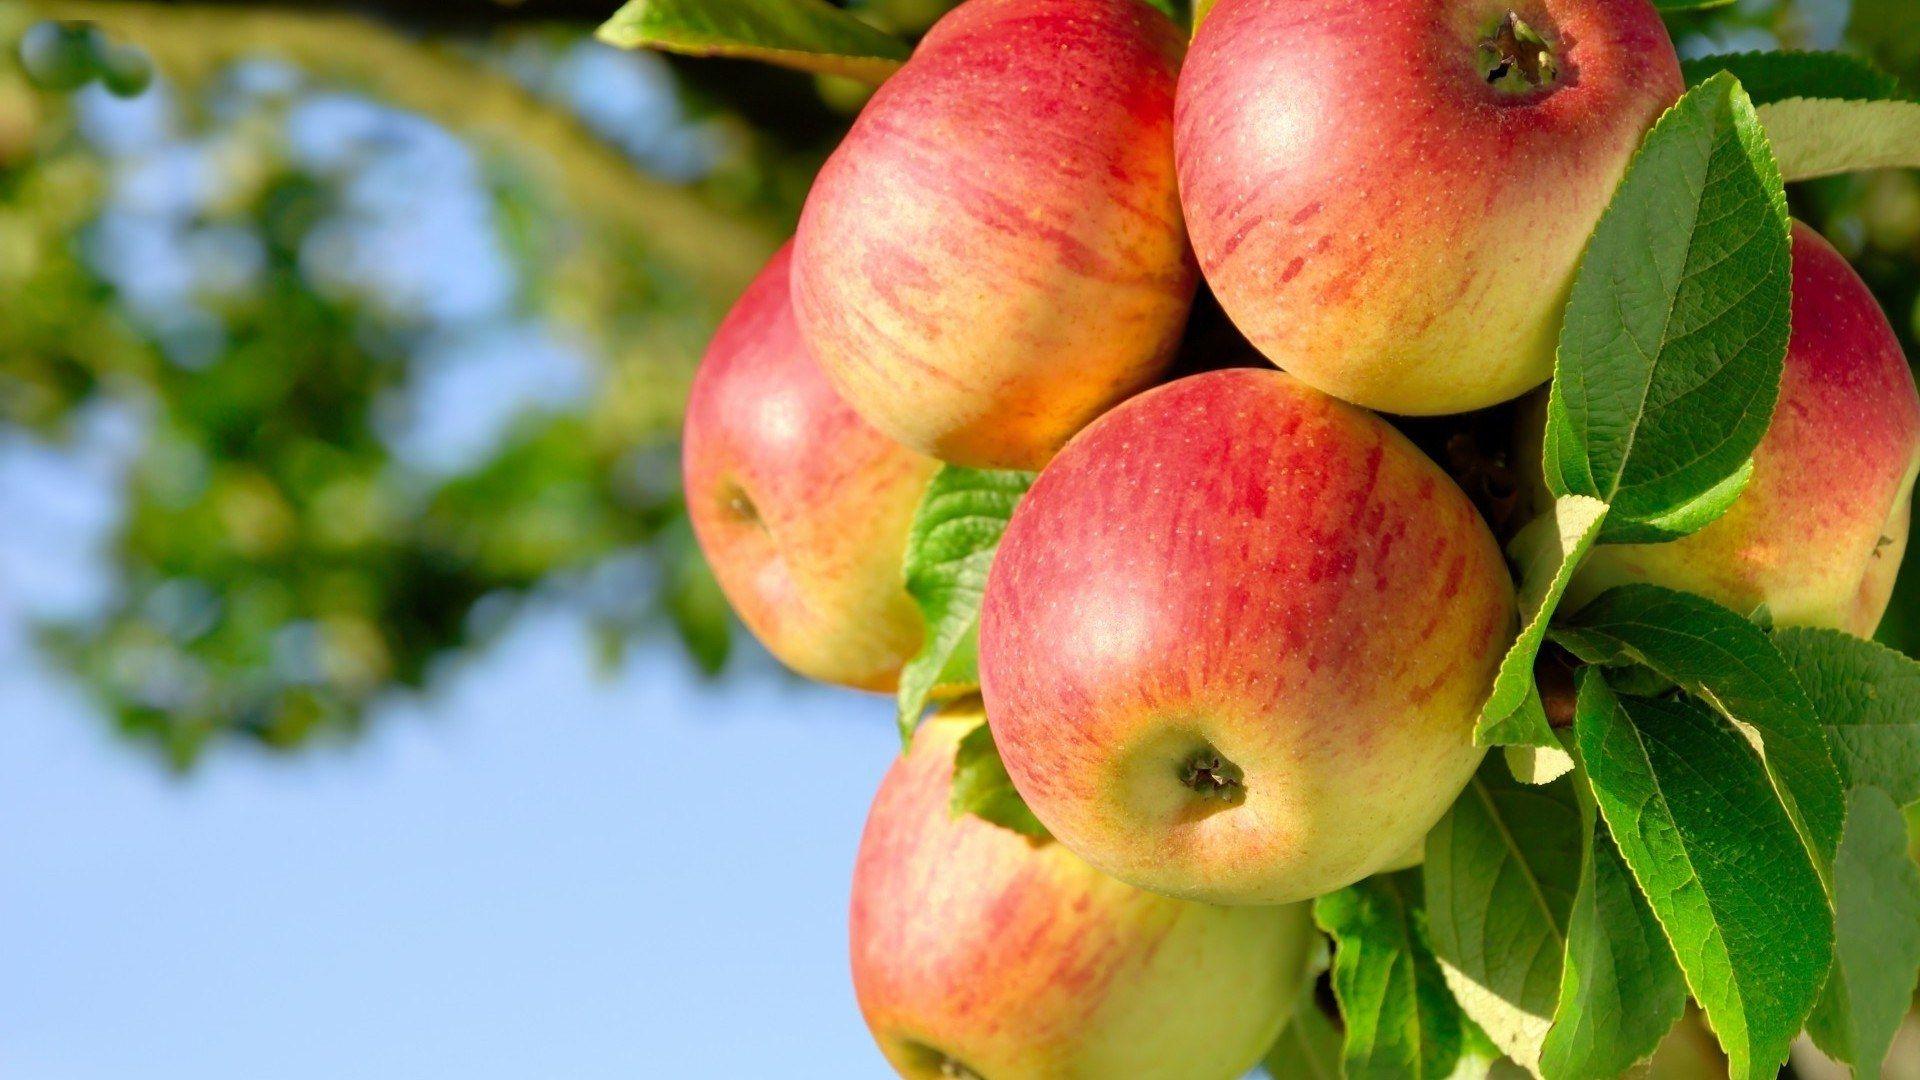 A Simple Christology Involving Utilitarian Fruit Trees AKA: “Jesus